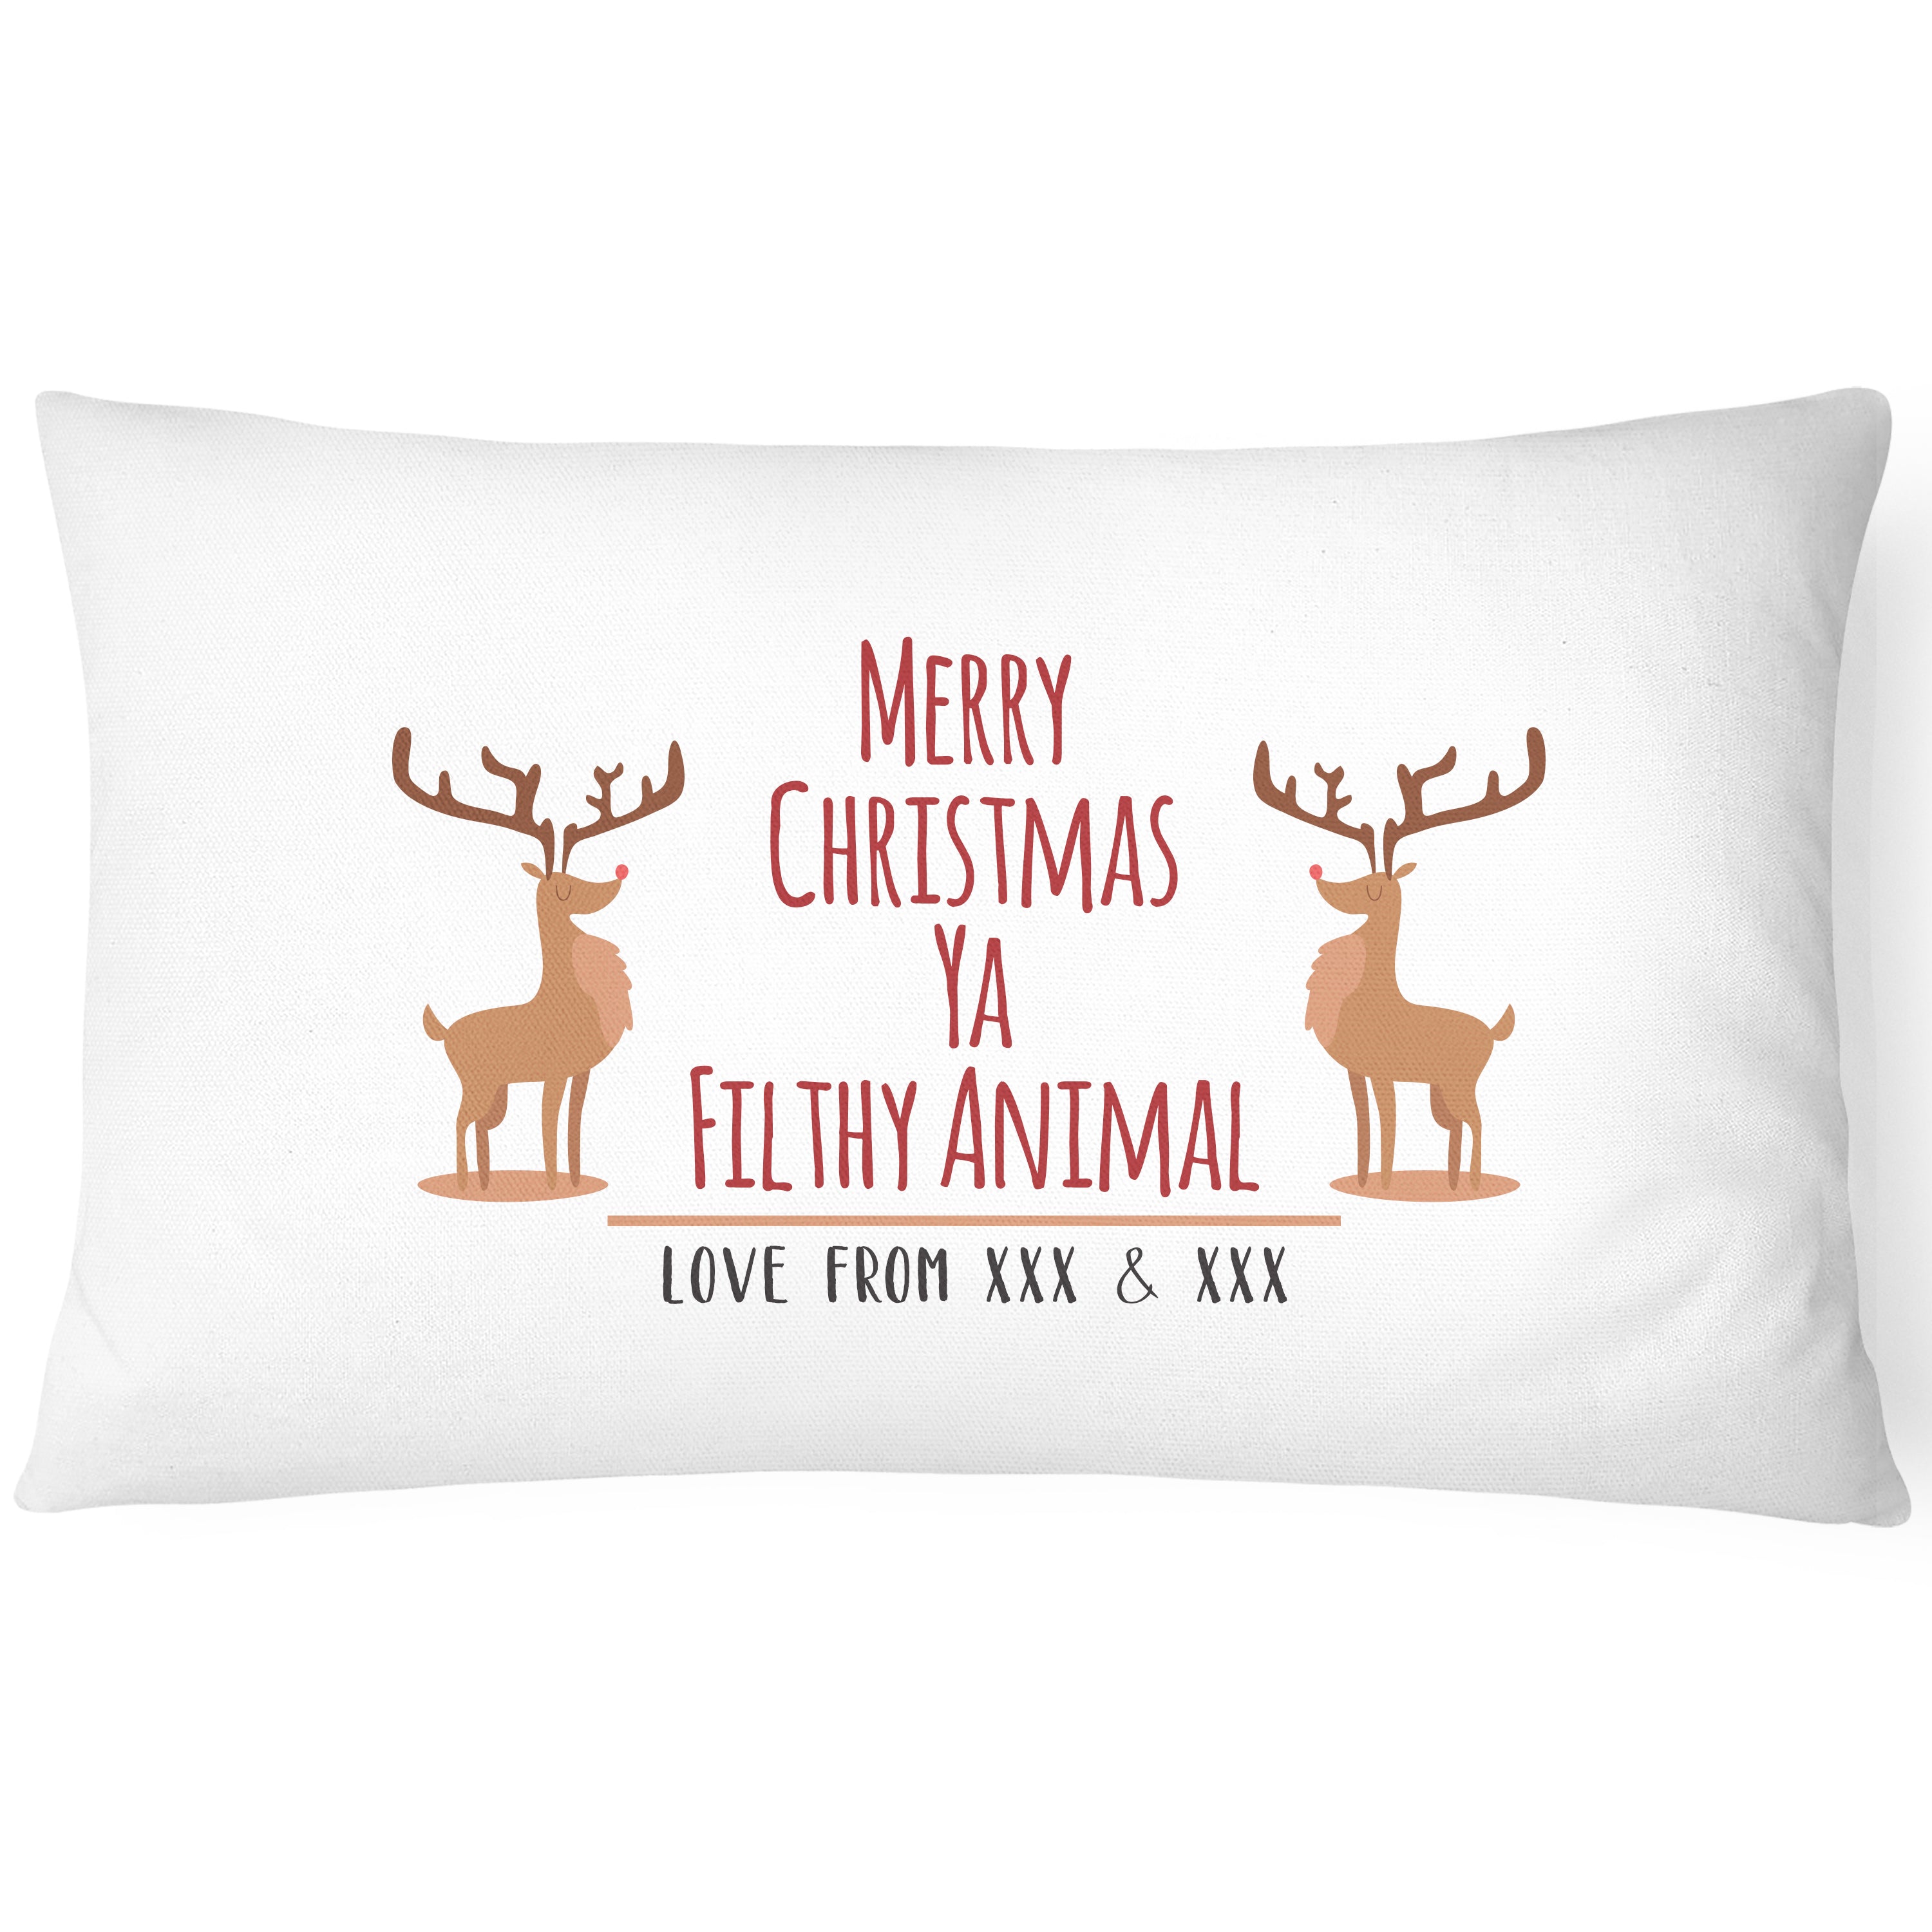 Personalised Christmas Pillowcase - Filthy Animal